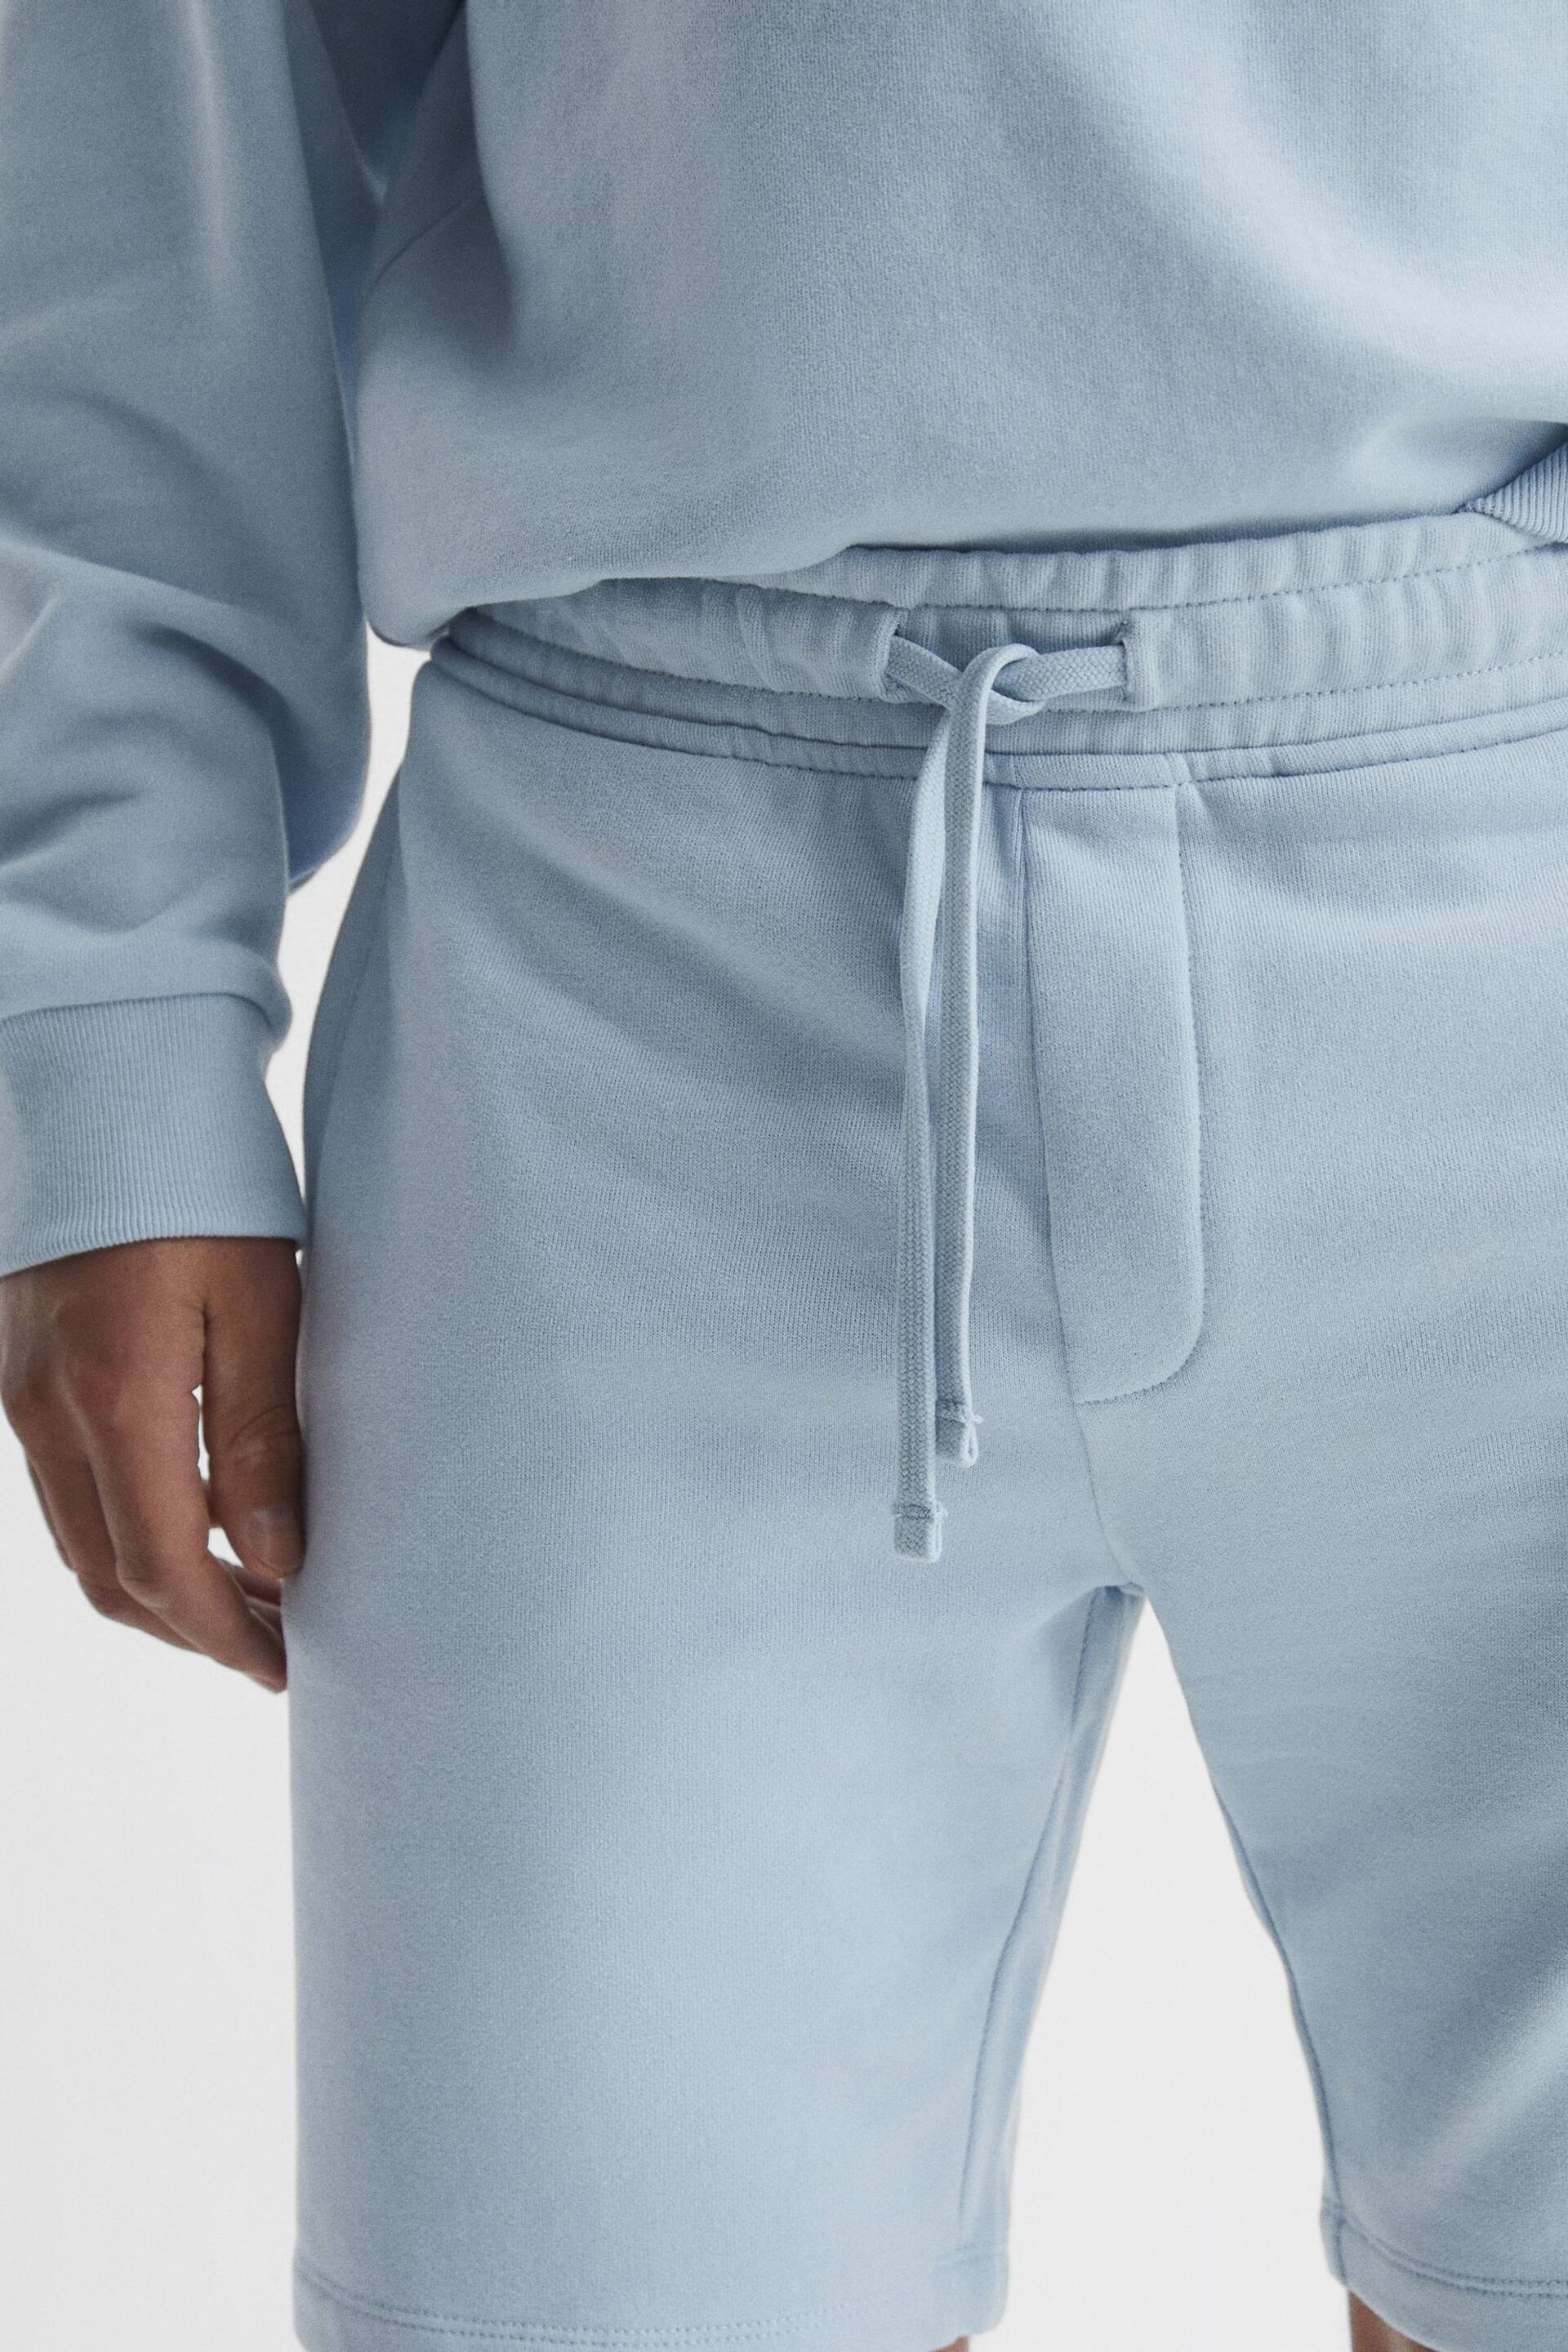 Reiss Ice Blue Henry Garment Dye Jersey Shorts - Image 4 of 5